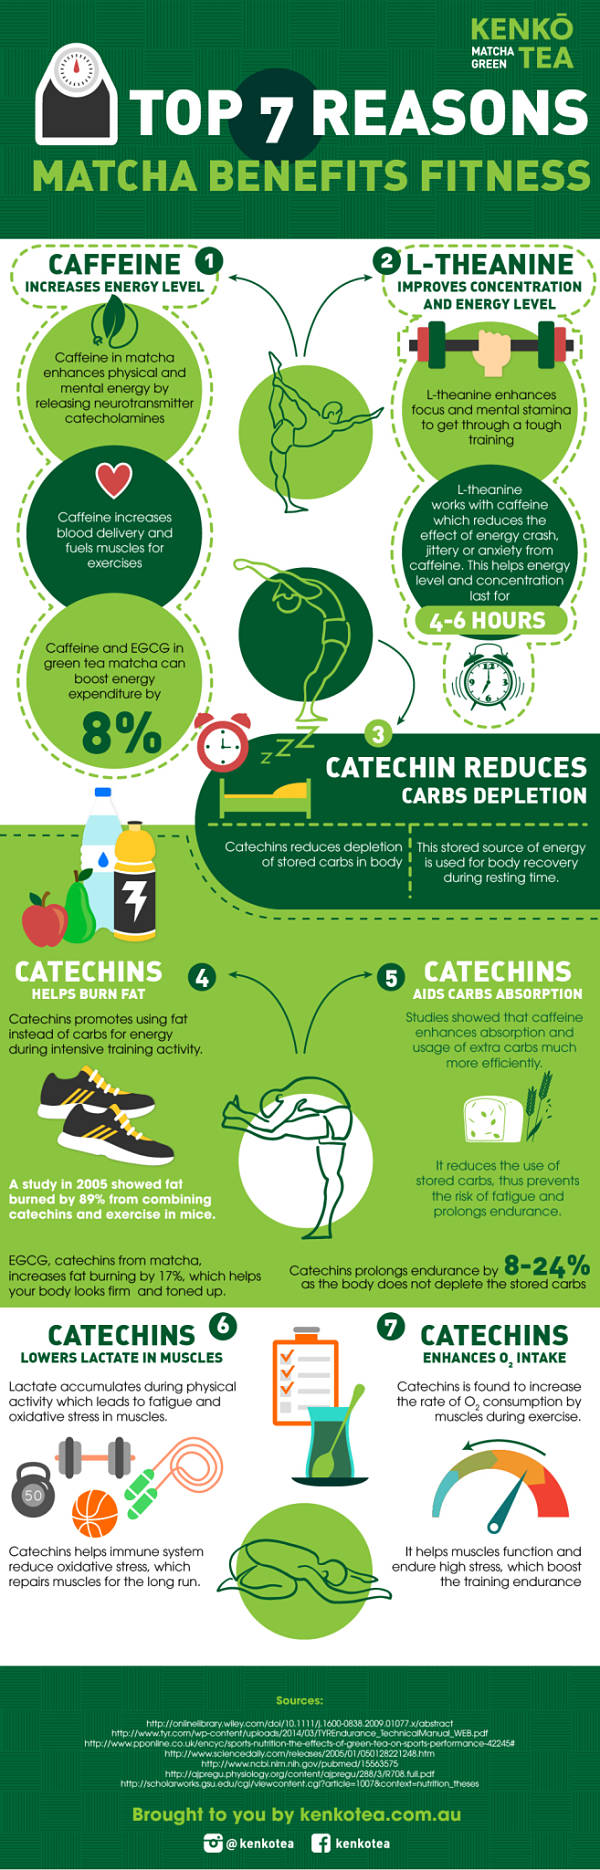 Matcha improves training performance infographic by Kenko Tea